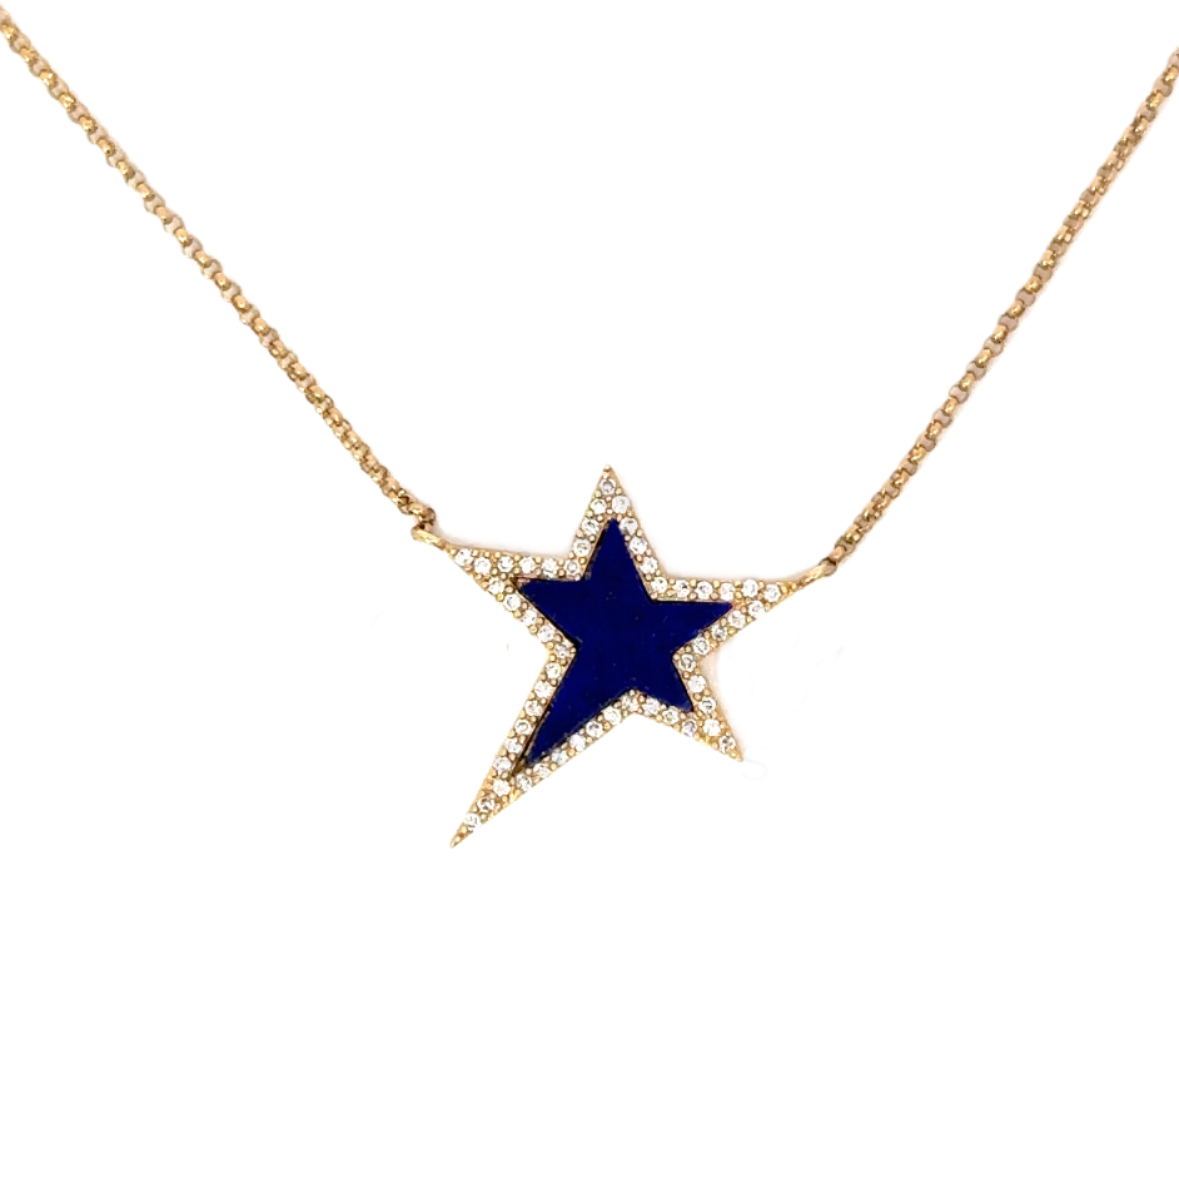 Lapis Star Necklace with Pave Diamond Border